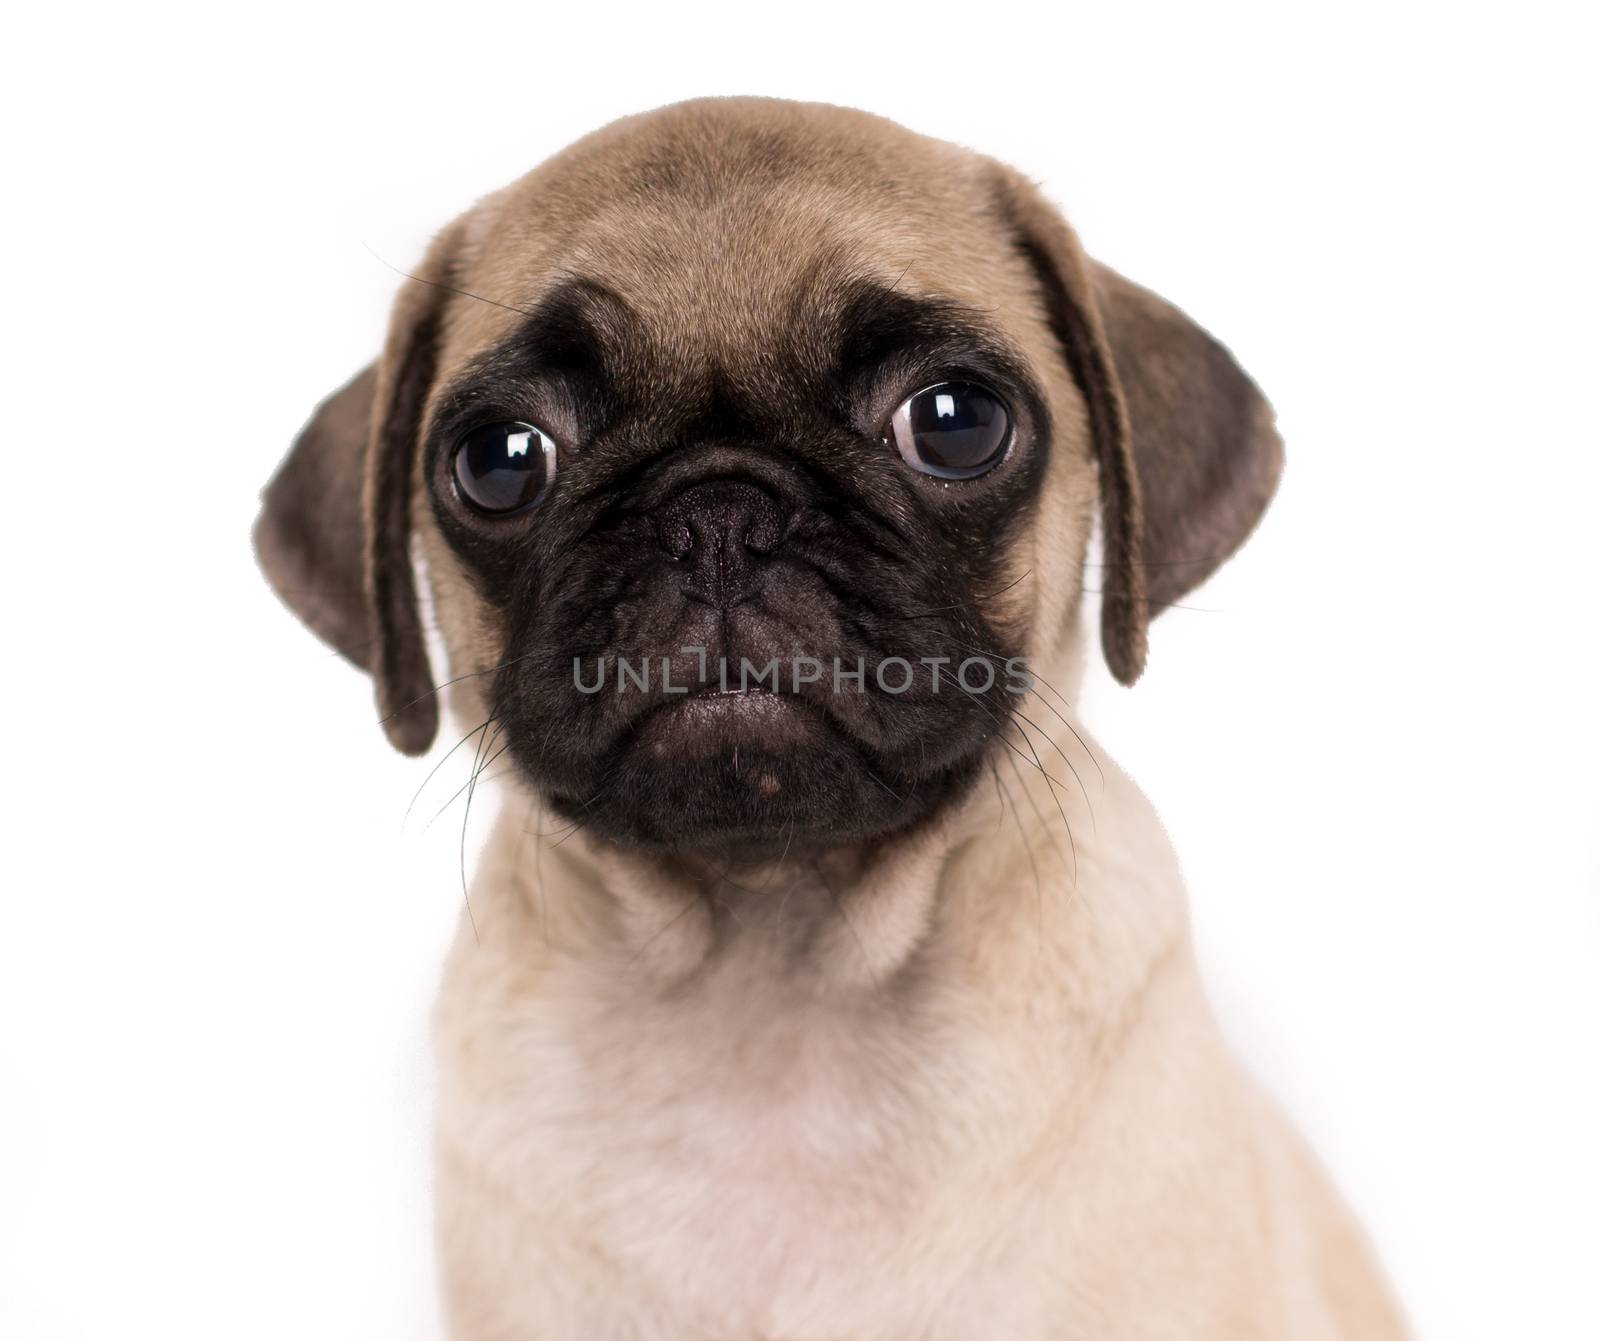 sad pug puppy close-up portrait in front of white bakcground by endika_zulaika